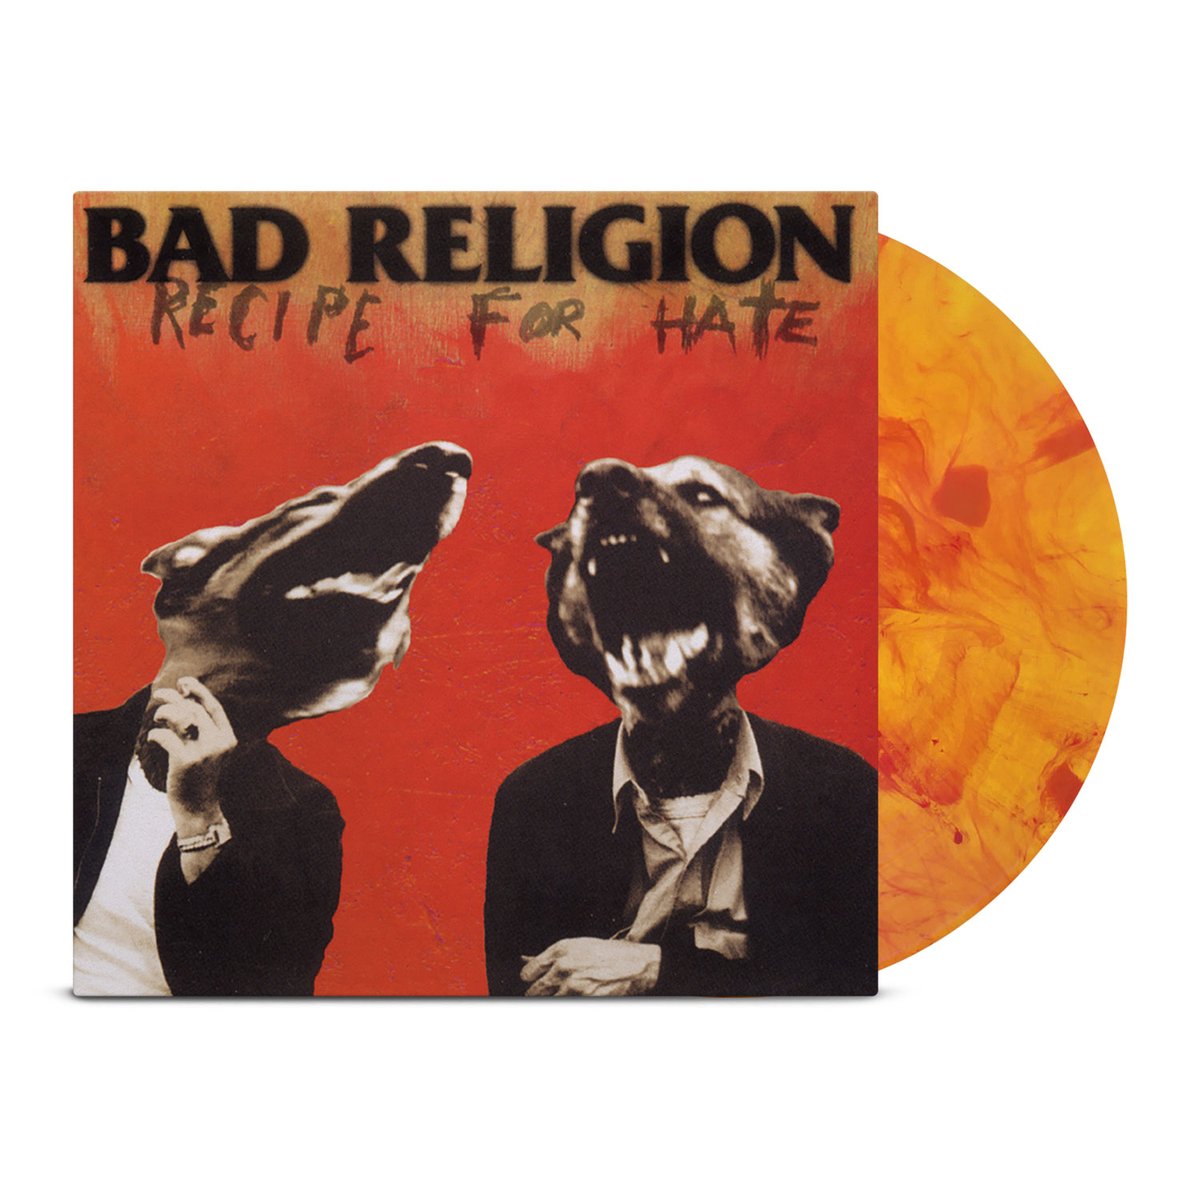 Recipe For Hate LP (Clear/Orange) badreligion.store/product/23655/… @badreligion @eddievedder Eddie Vedder of @PearlJam – guest vocals on 'American Jesus' and 'Watch It Die'